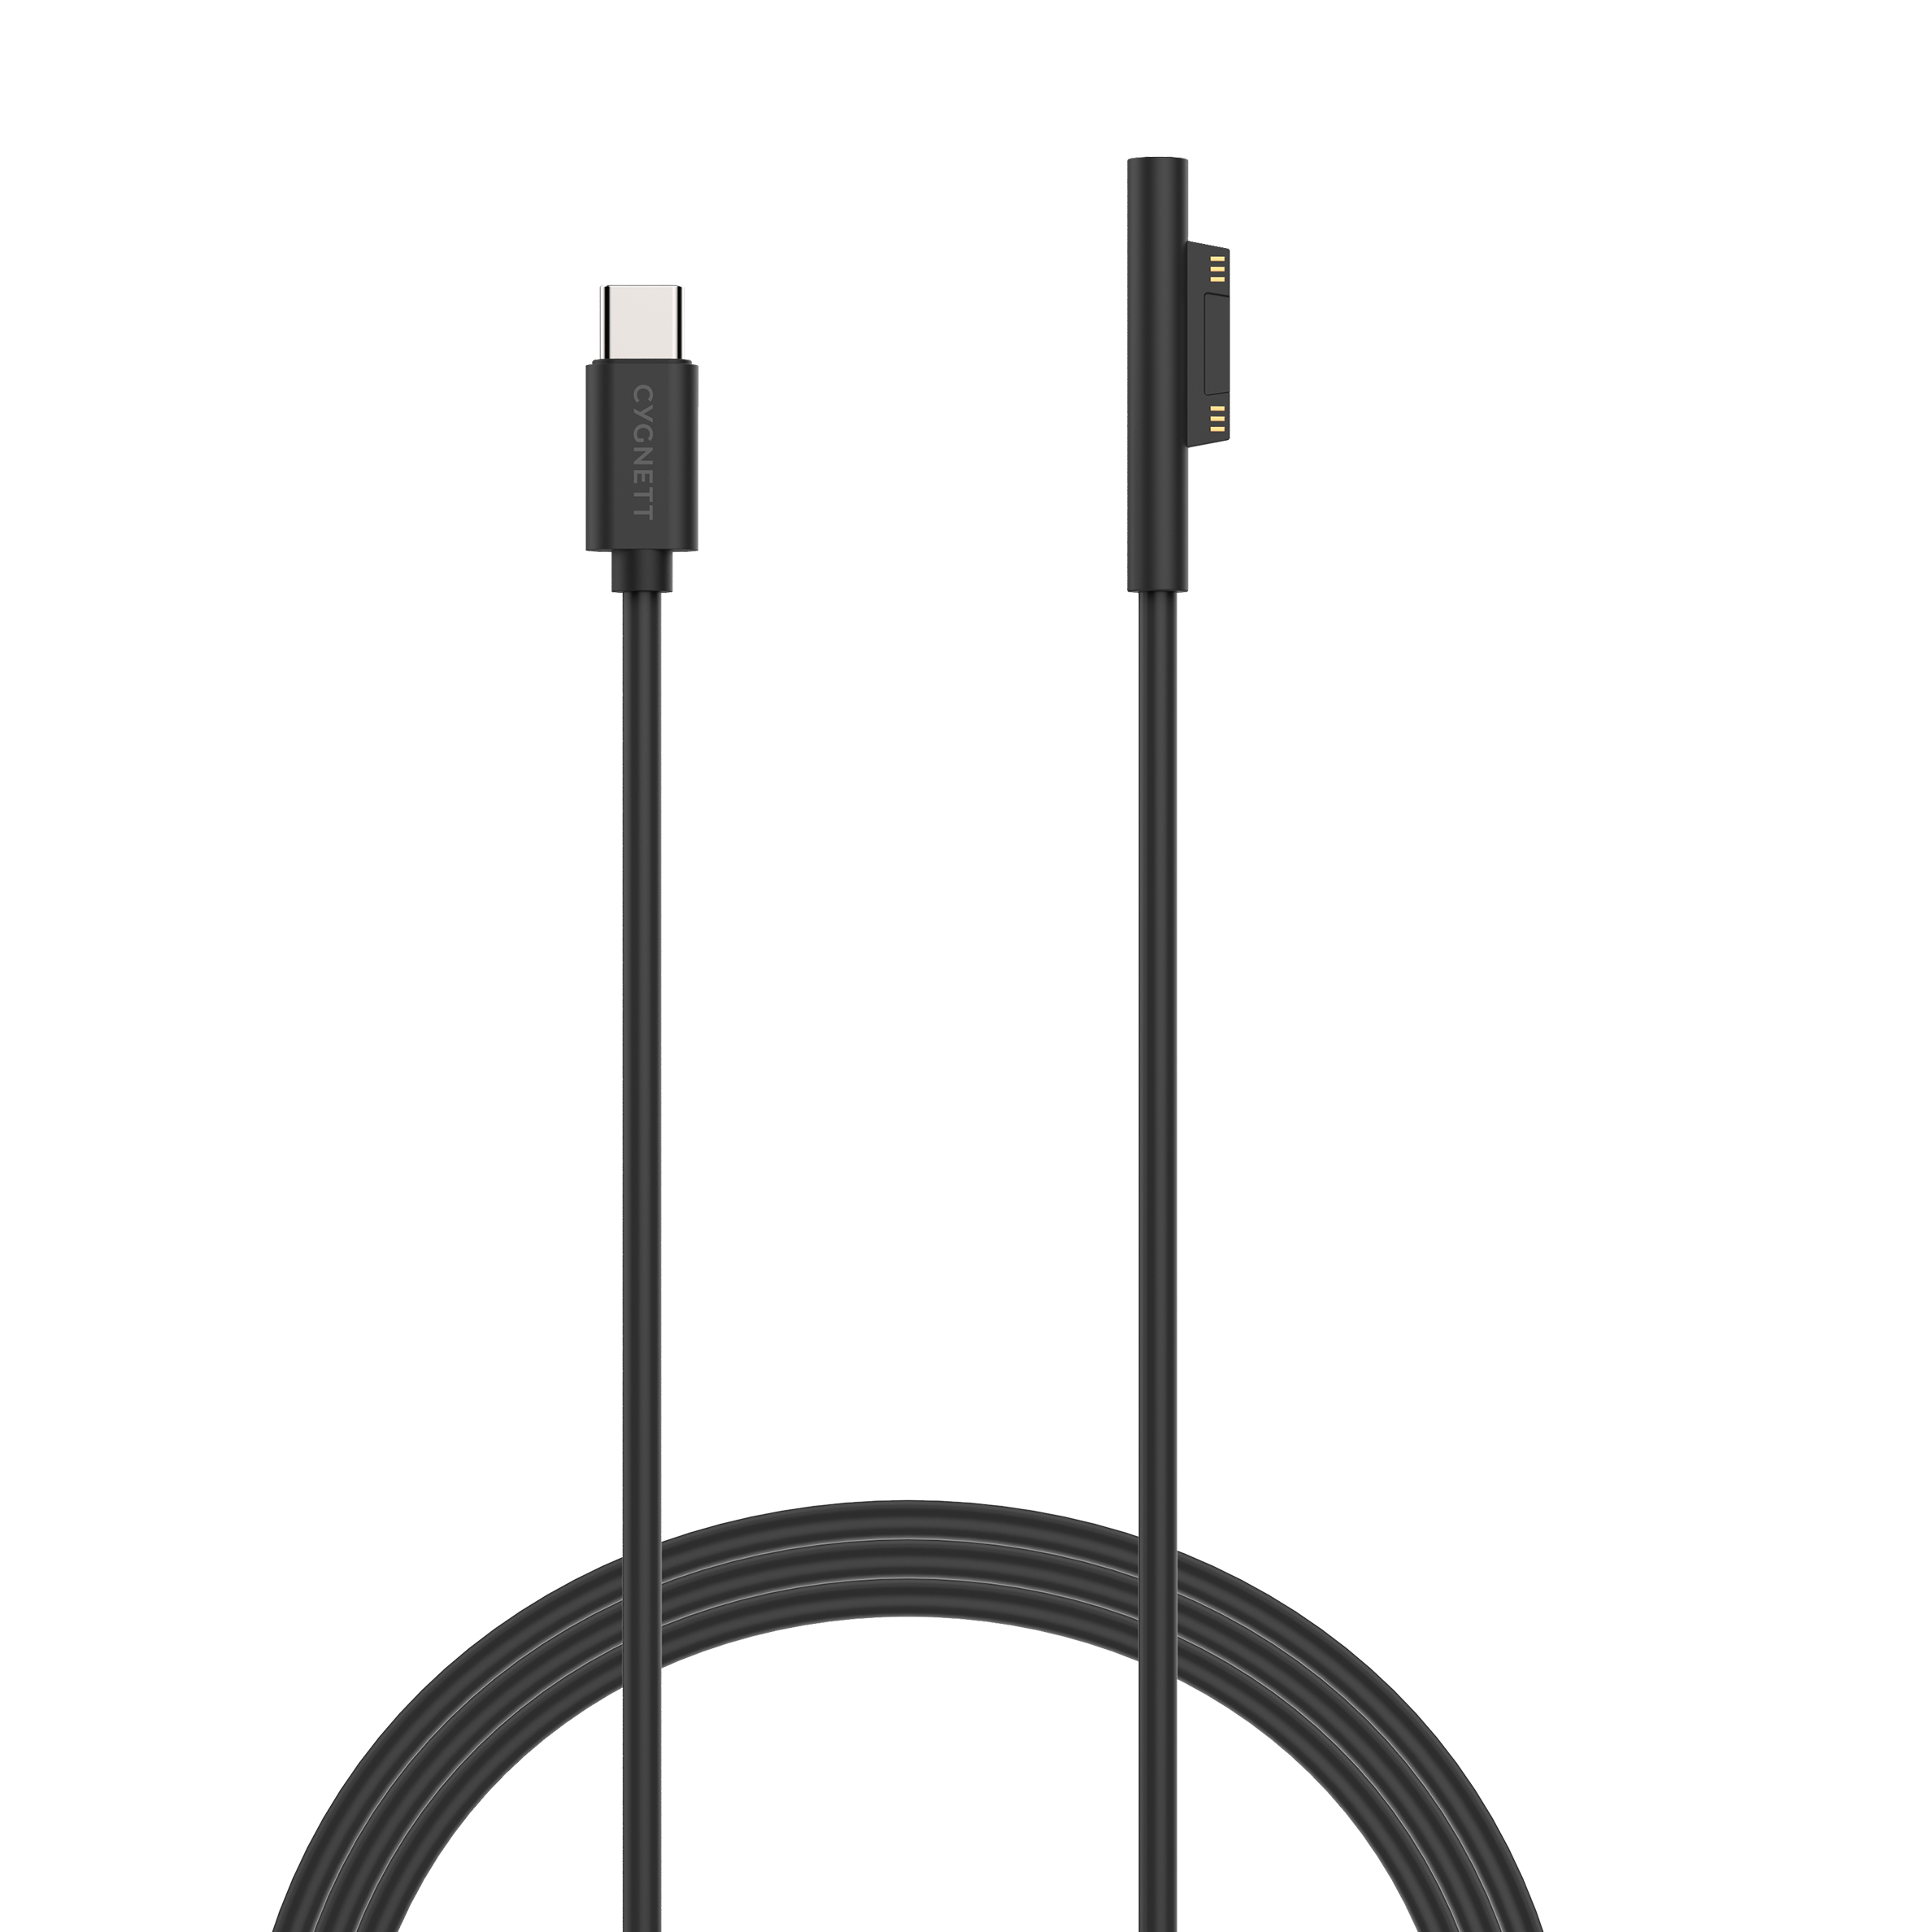 USB-C to Microsoft Surface Laptop Cable - Black 2m - Cygnett (AU)